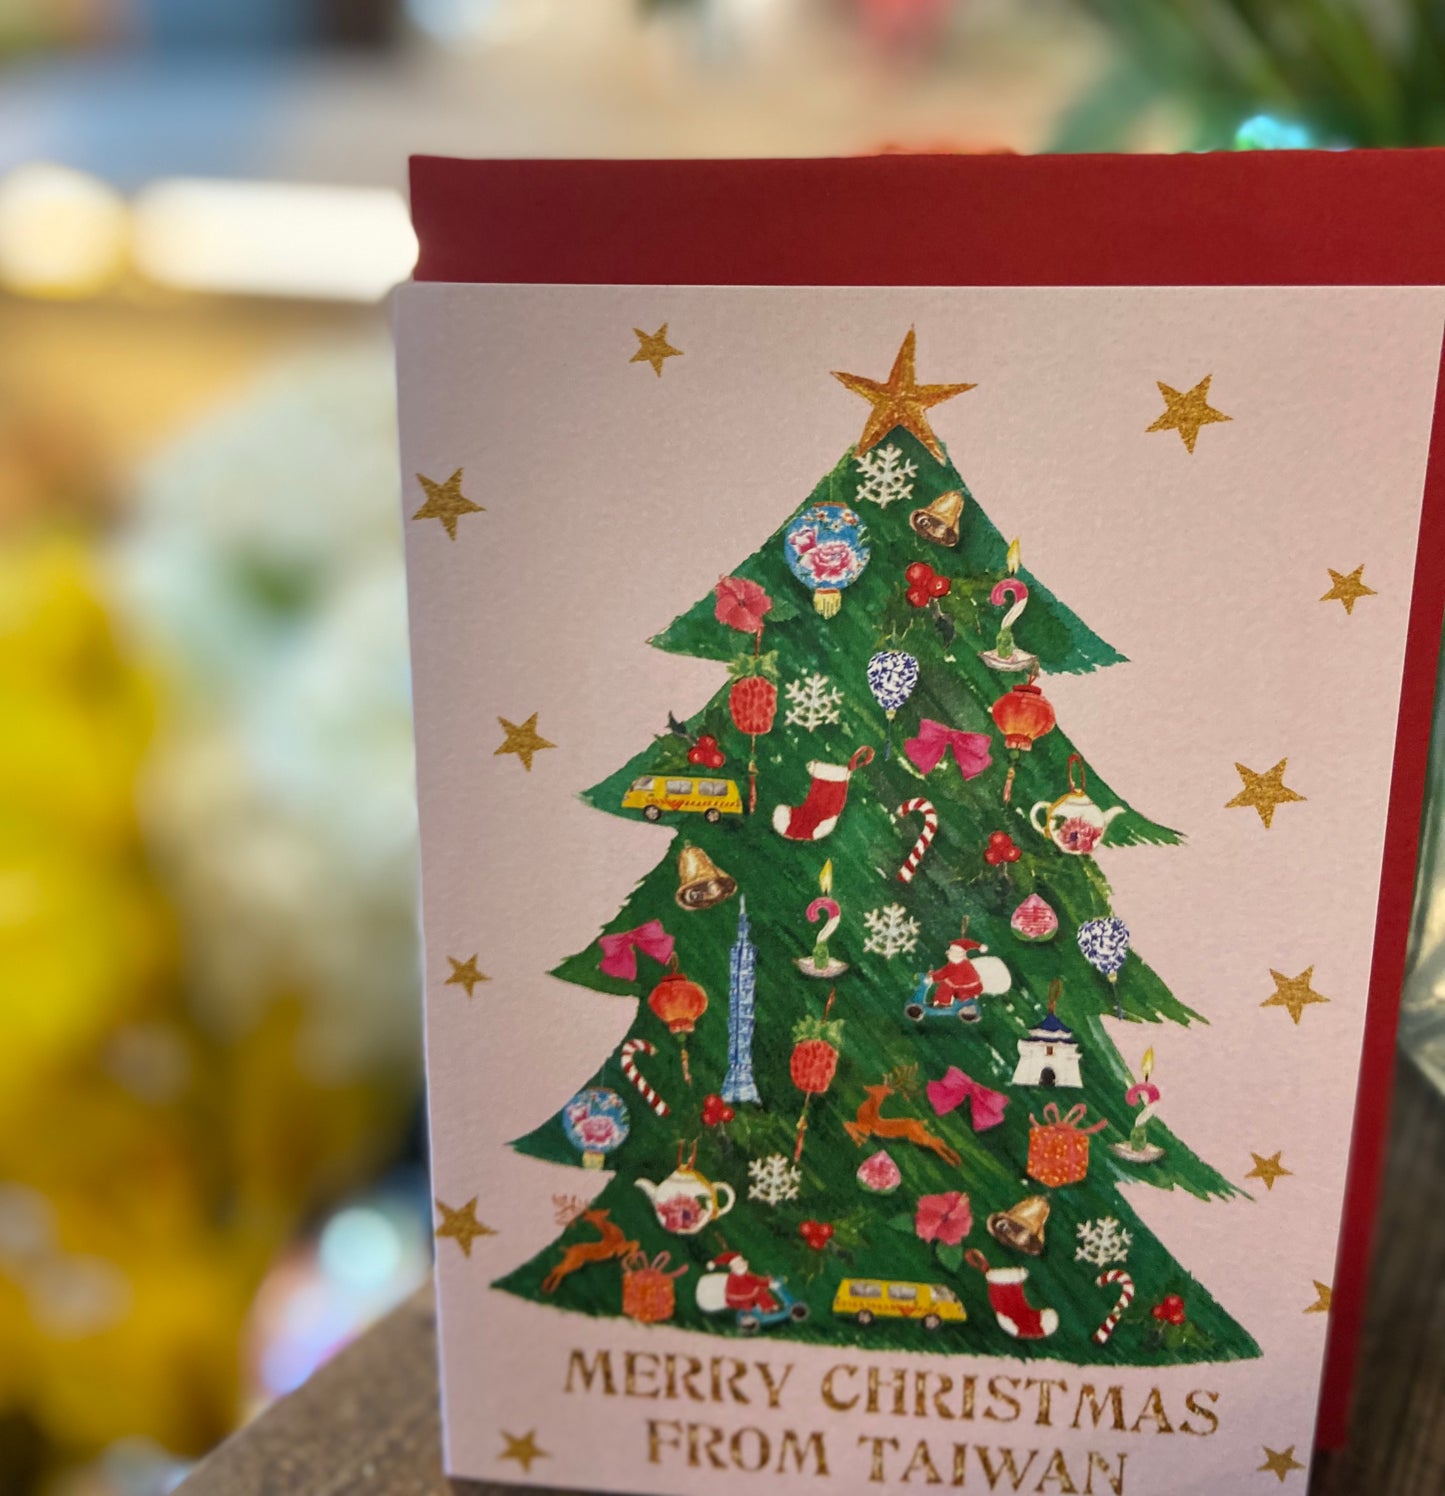 Taiwan Christmas tree card